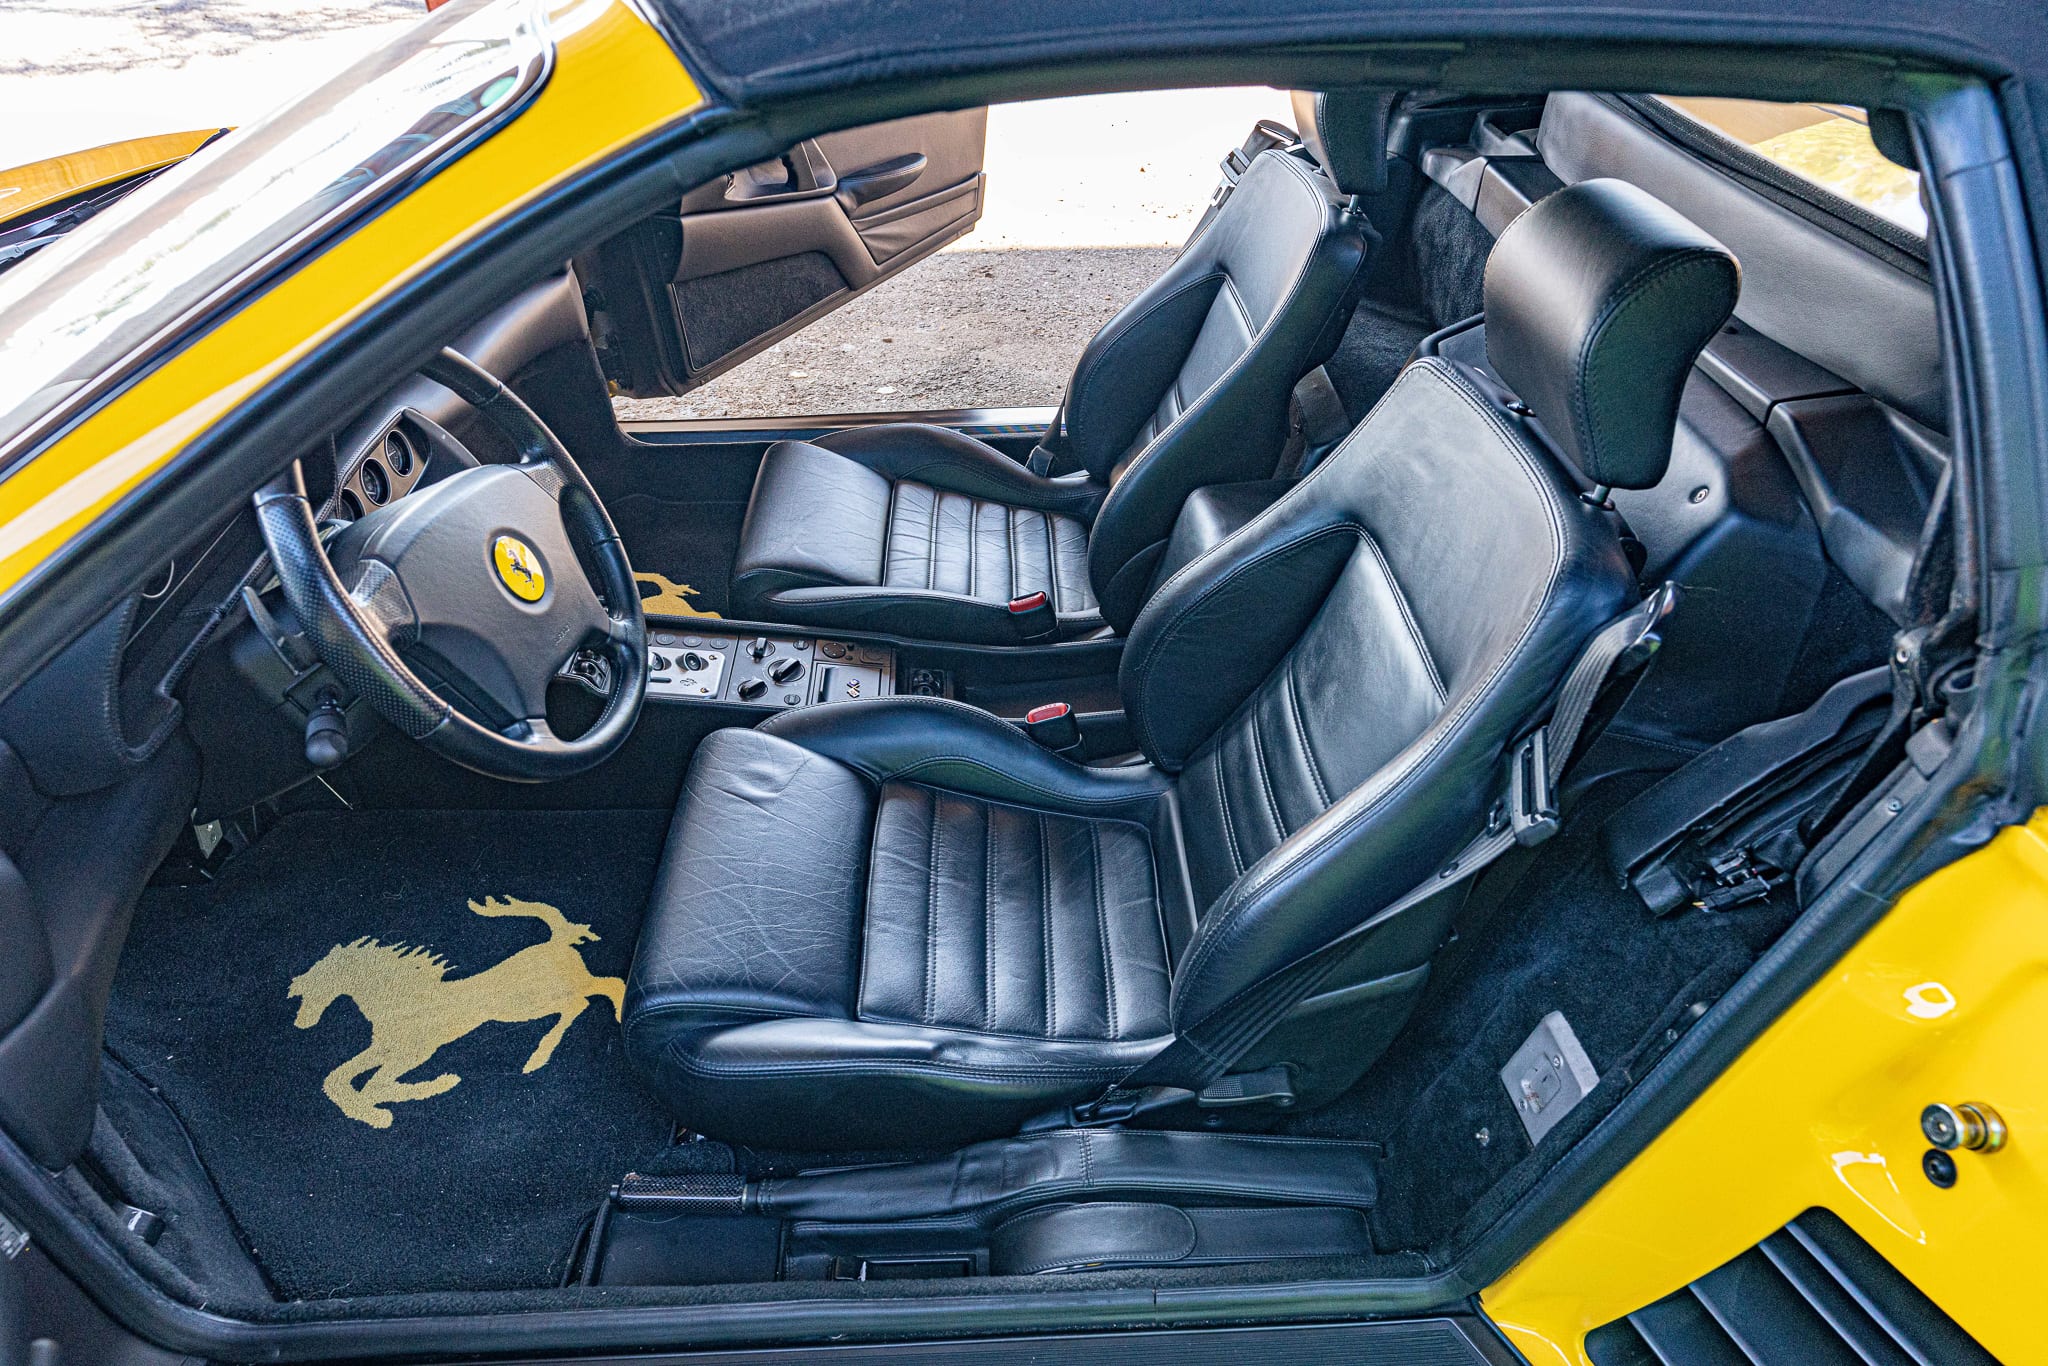 Ferrari F355 interior - Seats